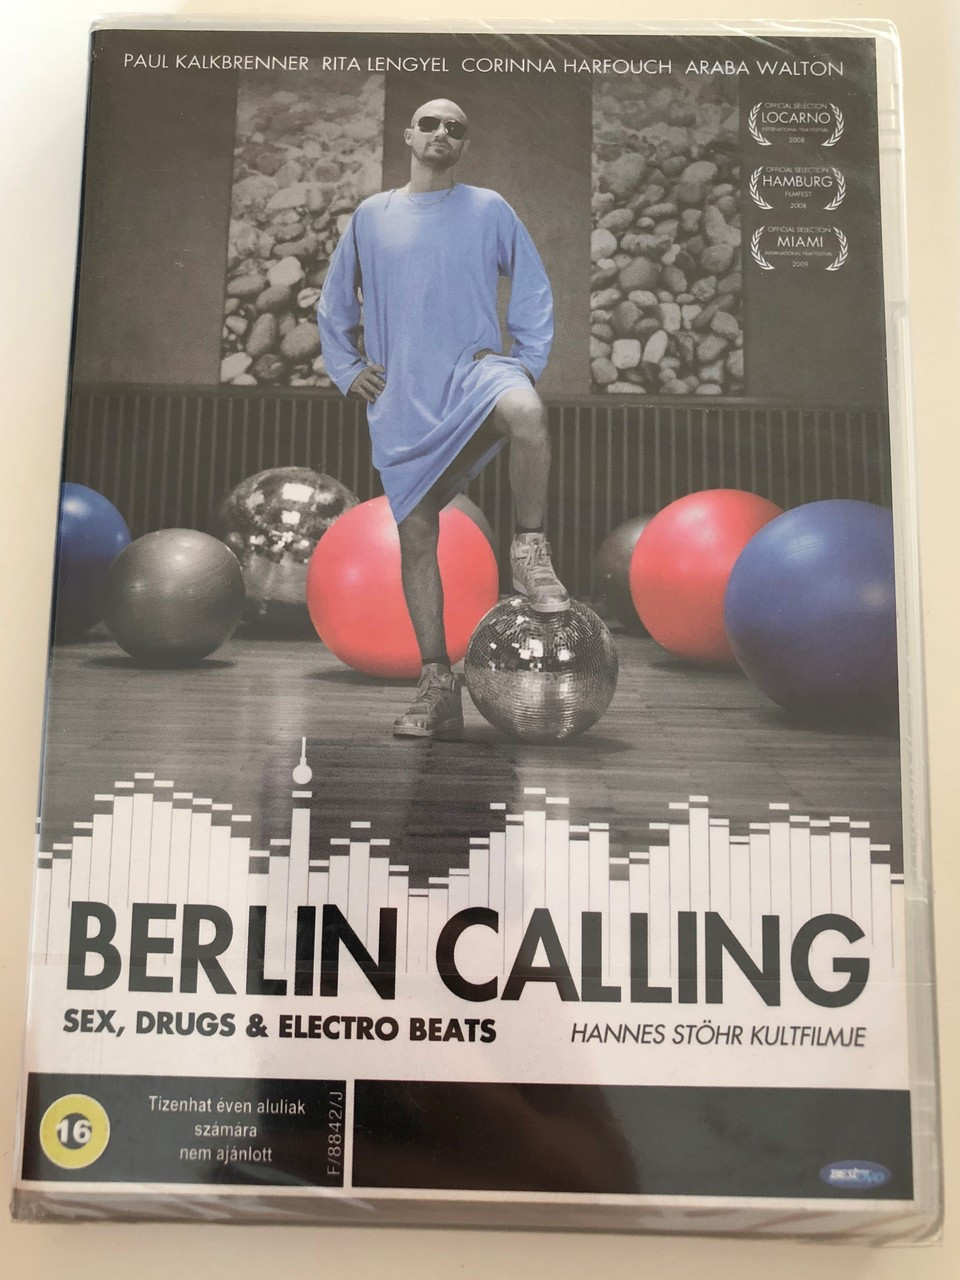 Berlin Calling DVD 2008 / Directed by Hannes Stöhr / Starring: Paul  Kalkbrenner, Corinna Harfouch, Rita Lengyel, RP Kahl, Araba Walton -  bibleinmylanguage